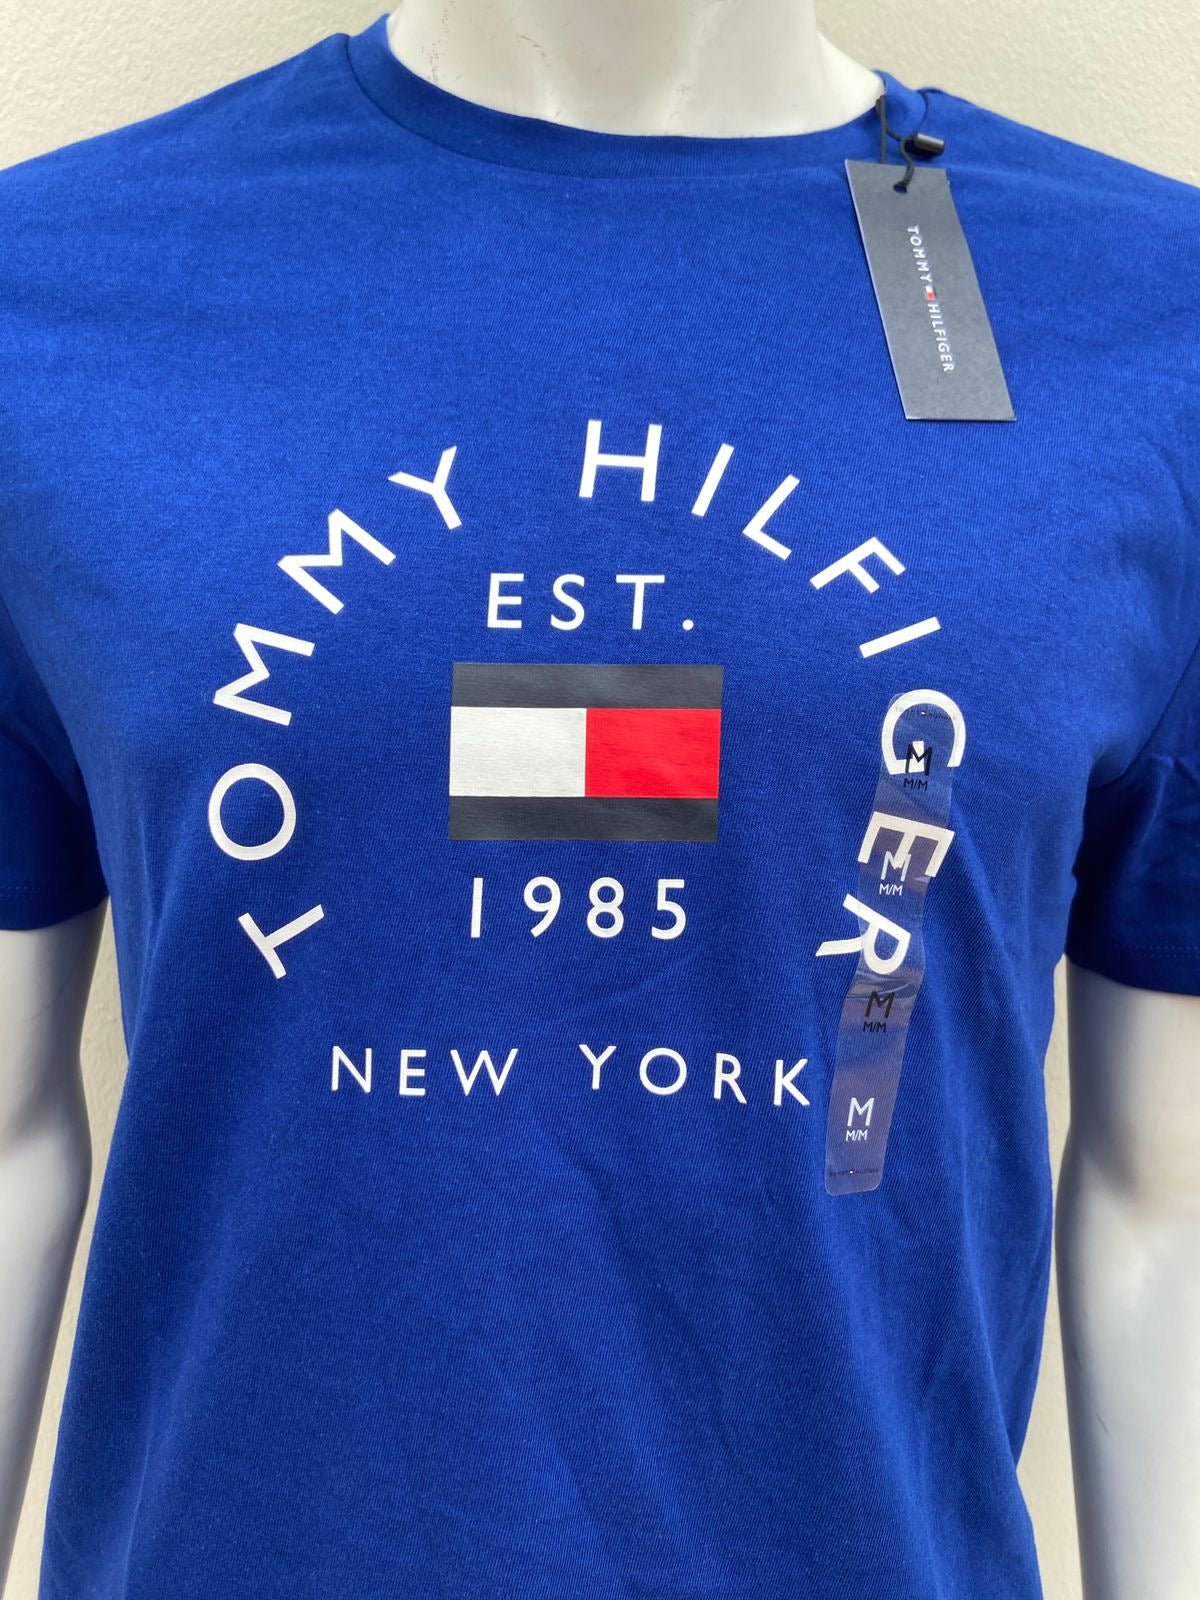 T-shirt Tommy Hilfiger Original azul oscuro con logo (Tommy Hilfiger 1985, New York).